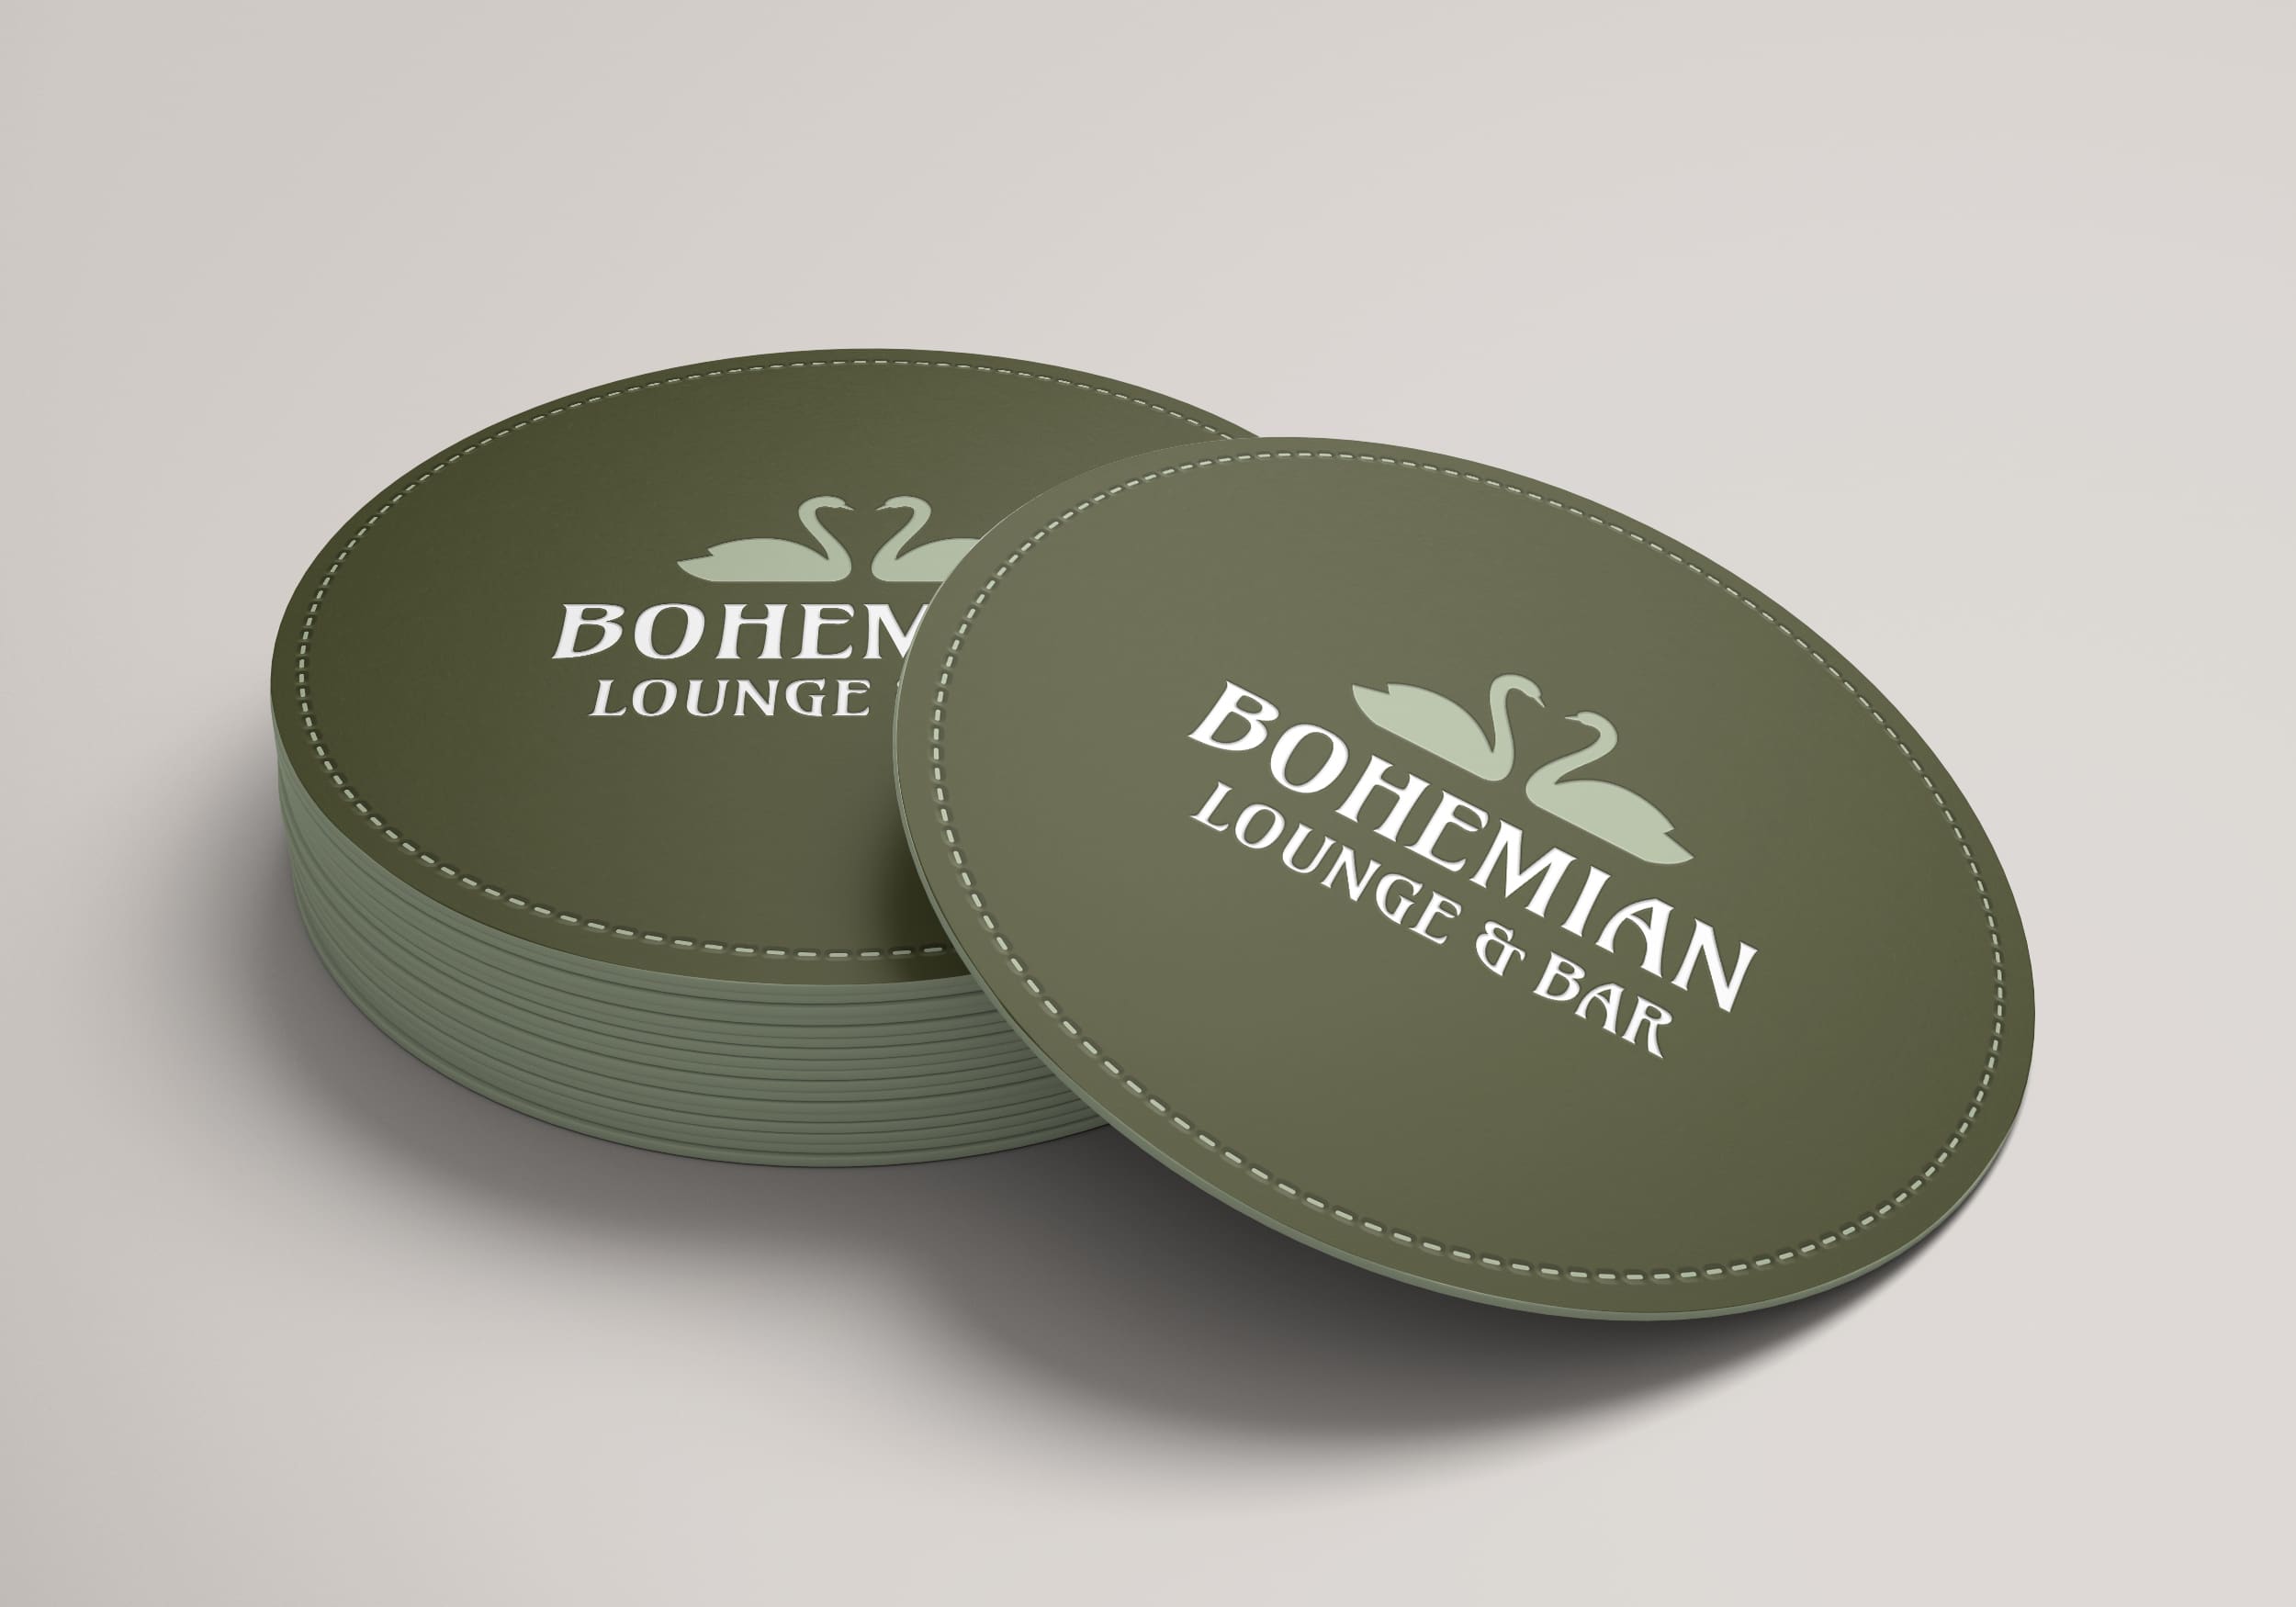 Branding und Design bohemian Lounge & Bar